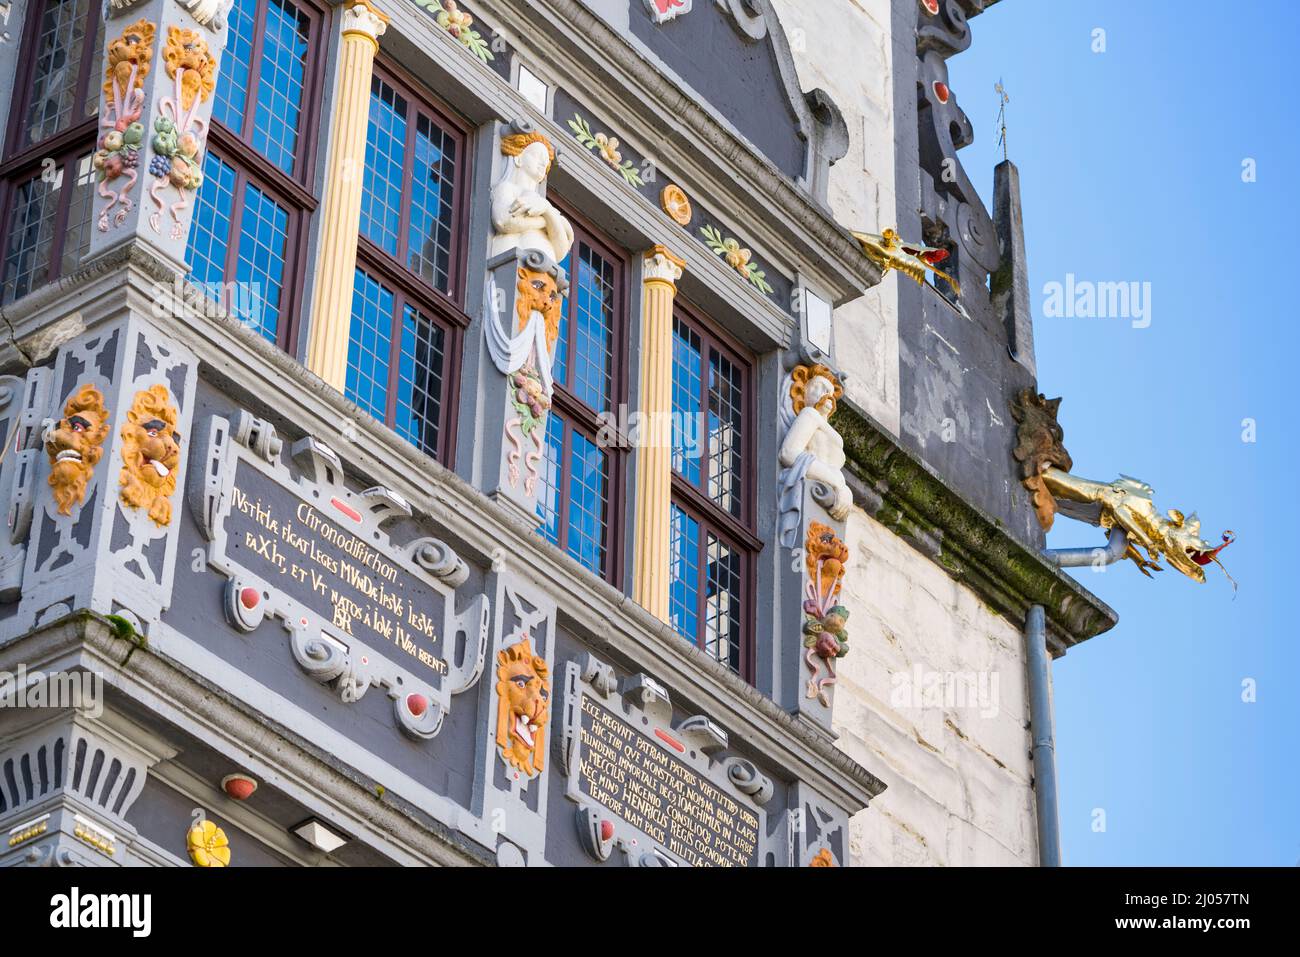 Dragon-headed gargoyle, facade of the town hall, Hannoversch Münden, Lower Saxony, Germany, Europe Stock Photo